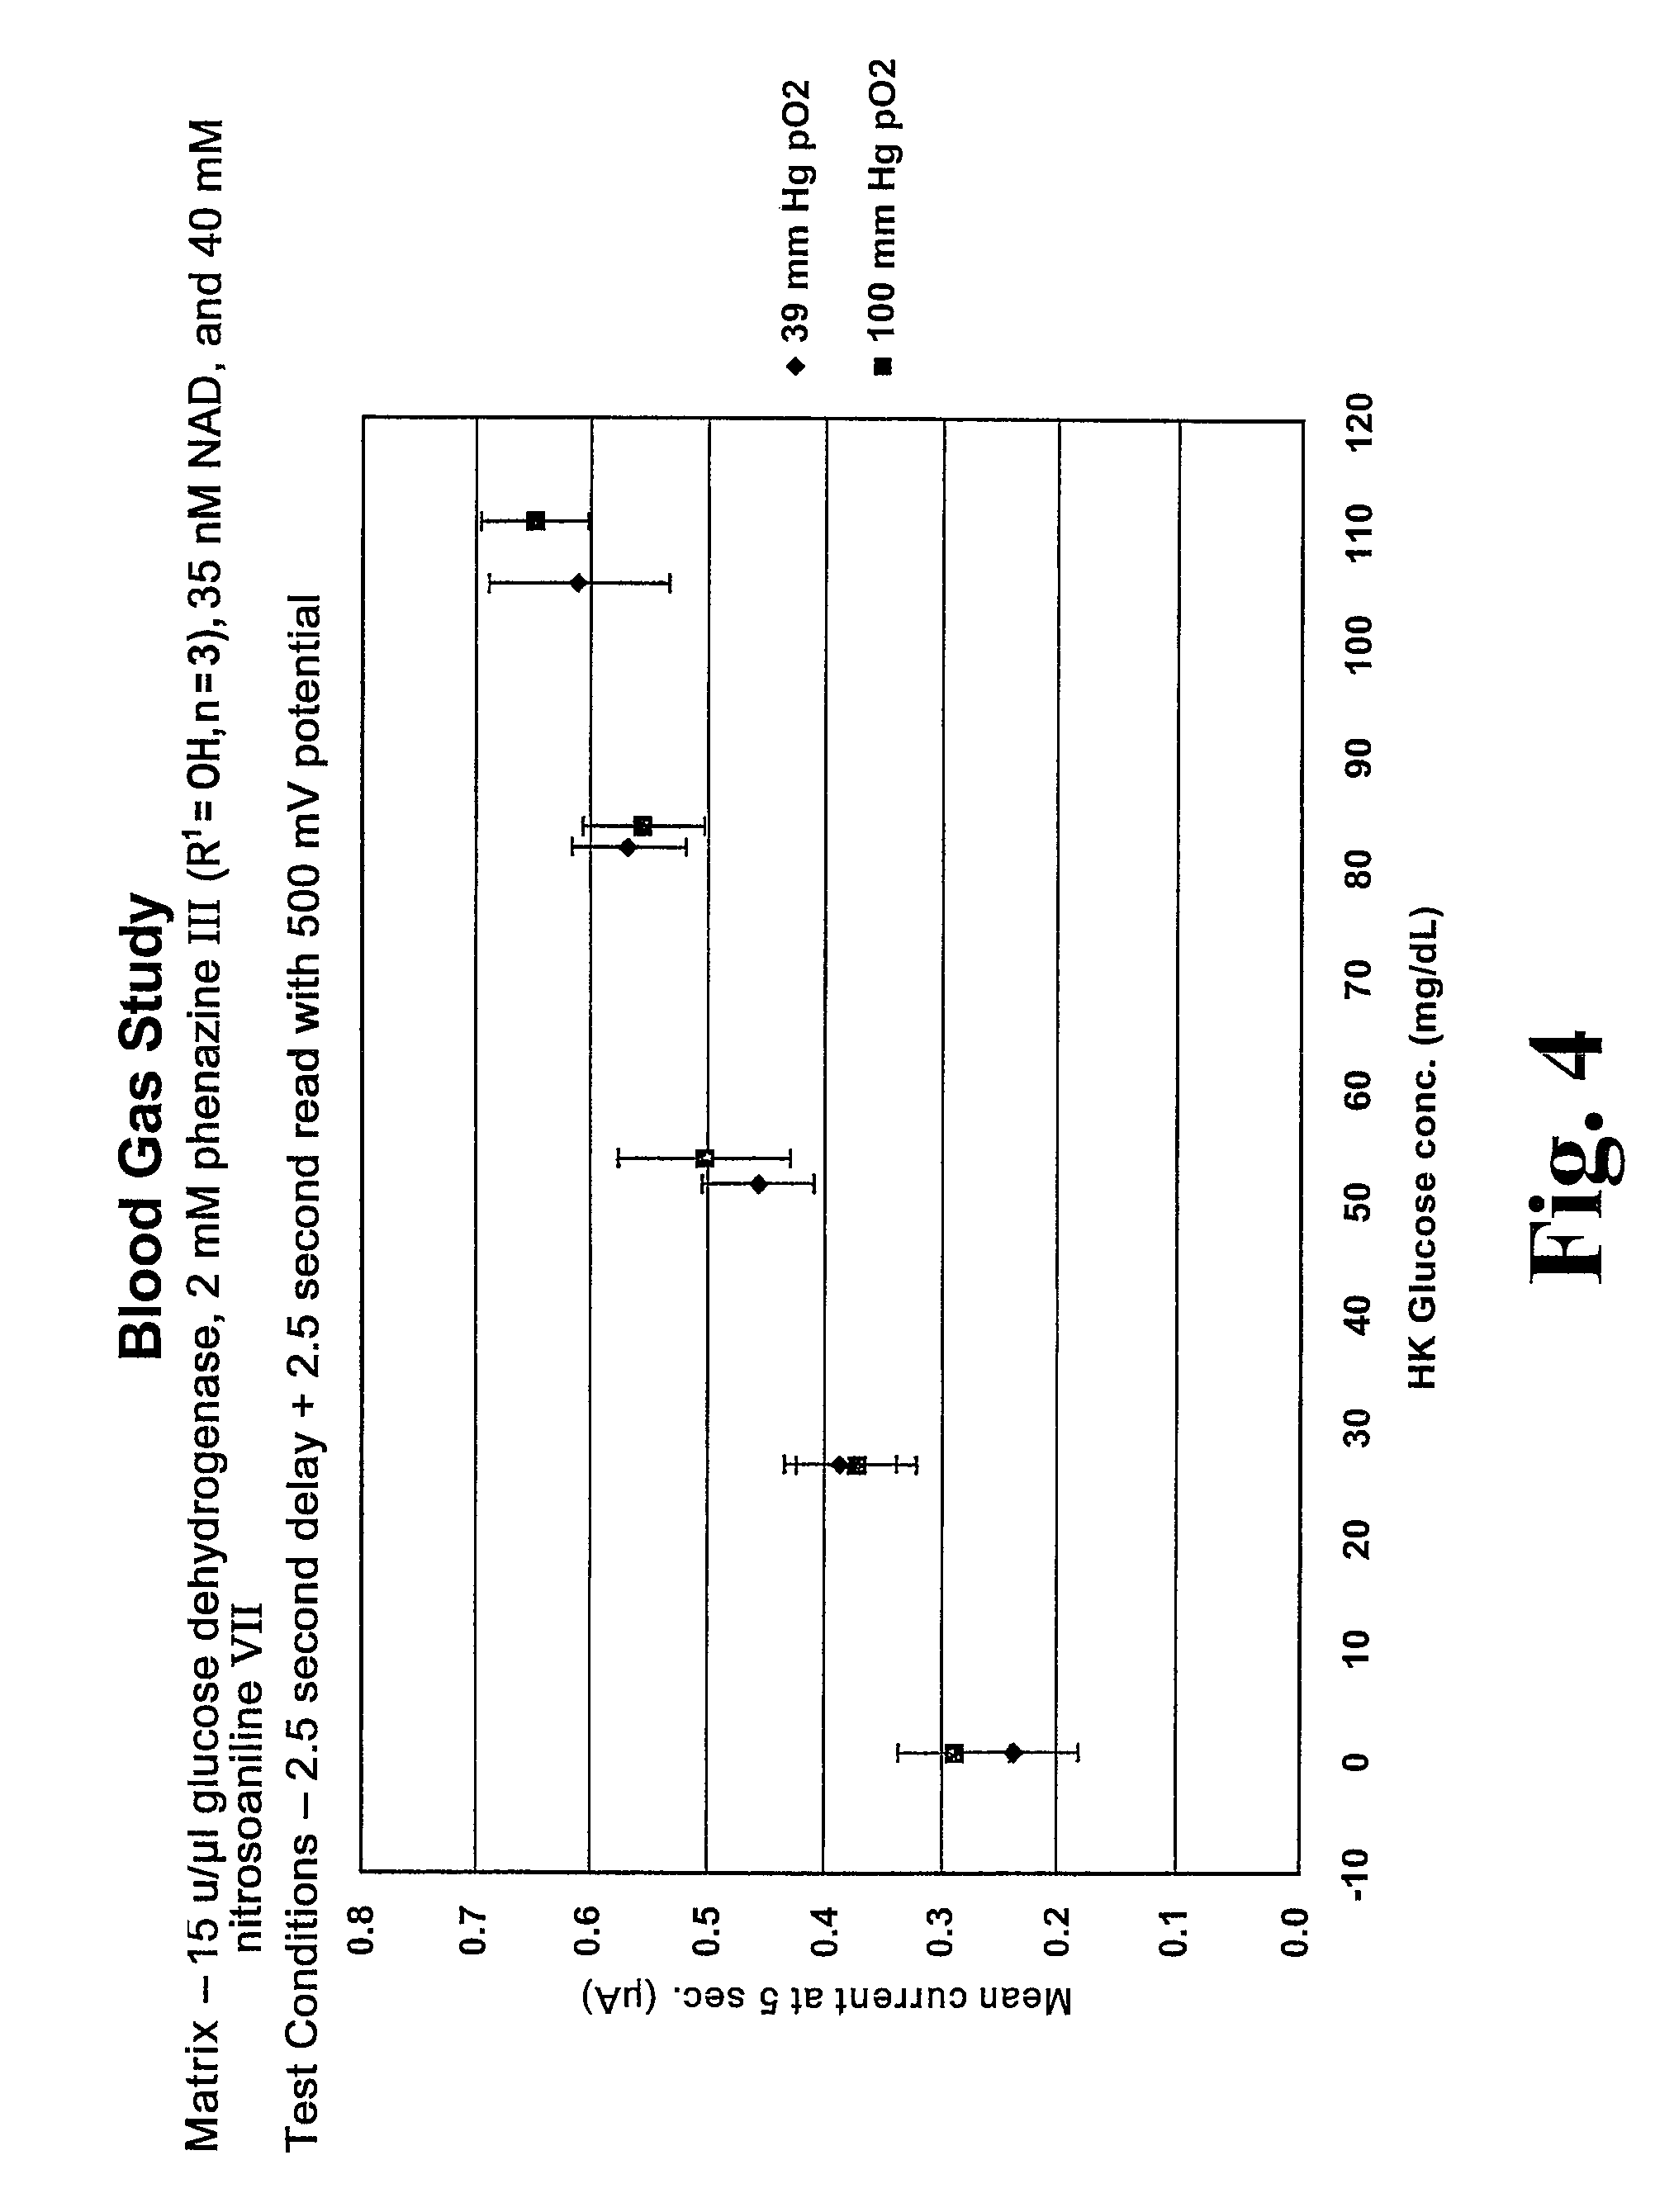 Matrix composition with alkylphenazine quaternary salt and a nitrosoaniline